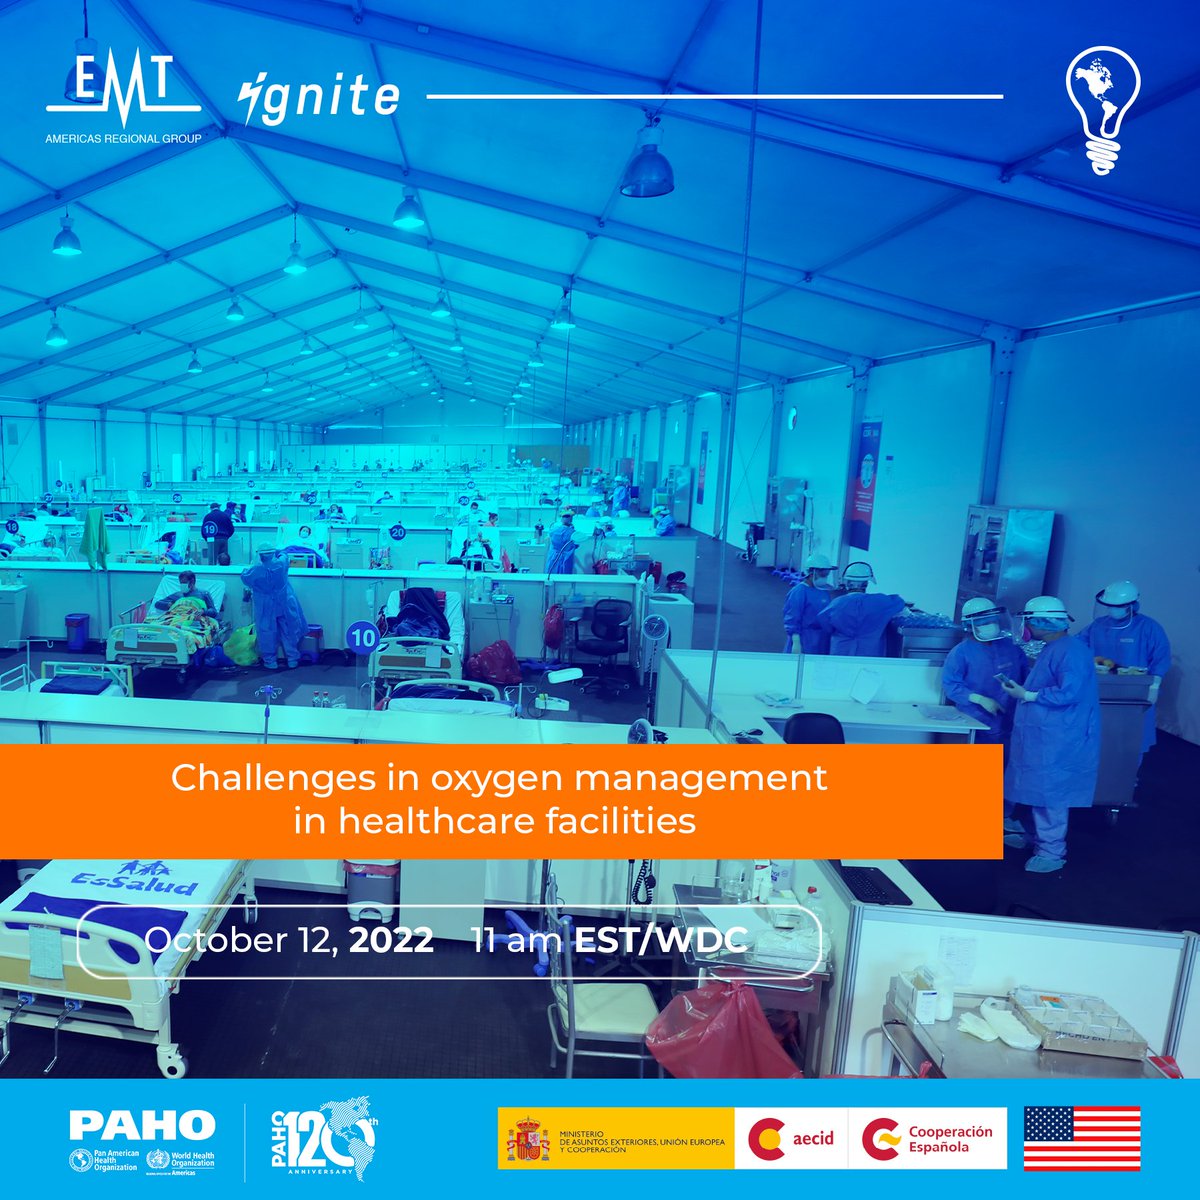 📌🙌This week on #EMTignite: webinar on 'Challenges during oxygen management in health care facilities'.🏥

📅Wednesday, October 12, 2022
🕐11:00 am EST/WDC

Register:  paho-org.zoom.us/webinar/regist…

#EMTAmericas